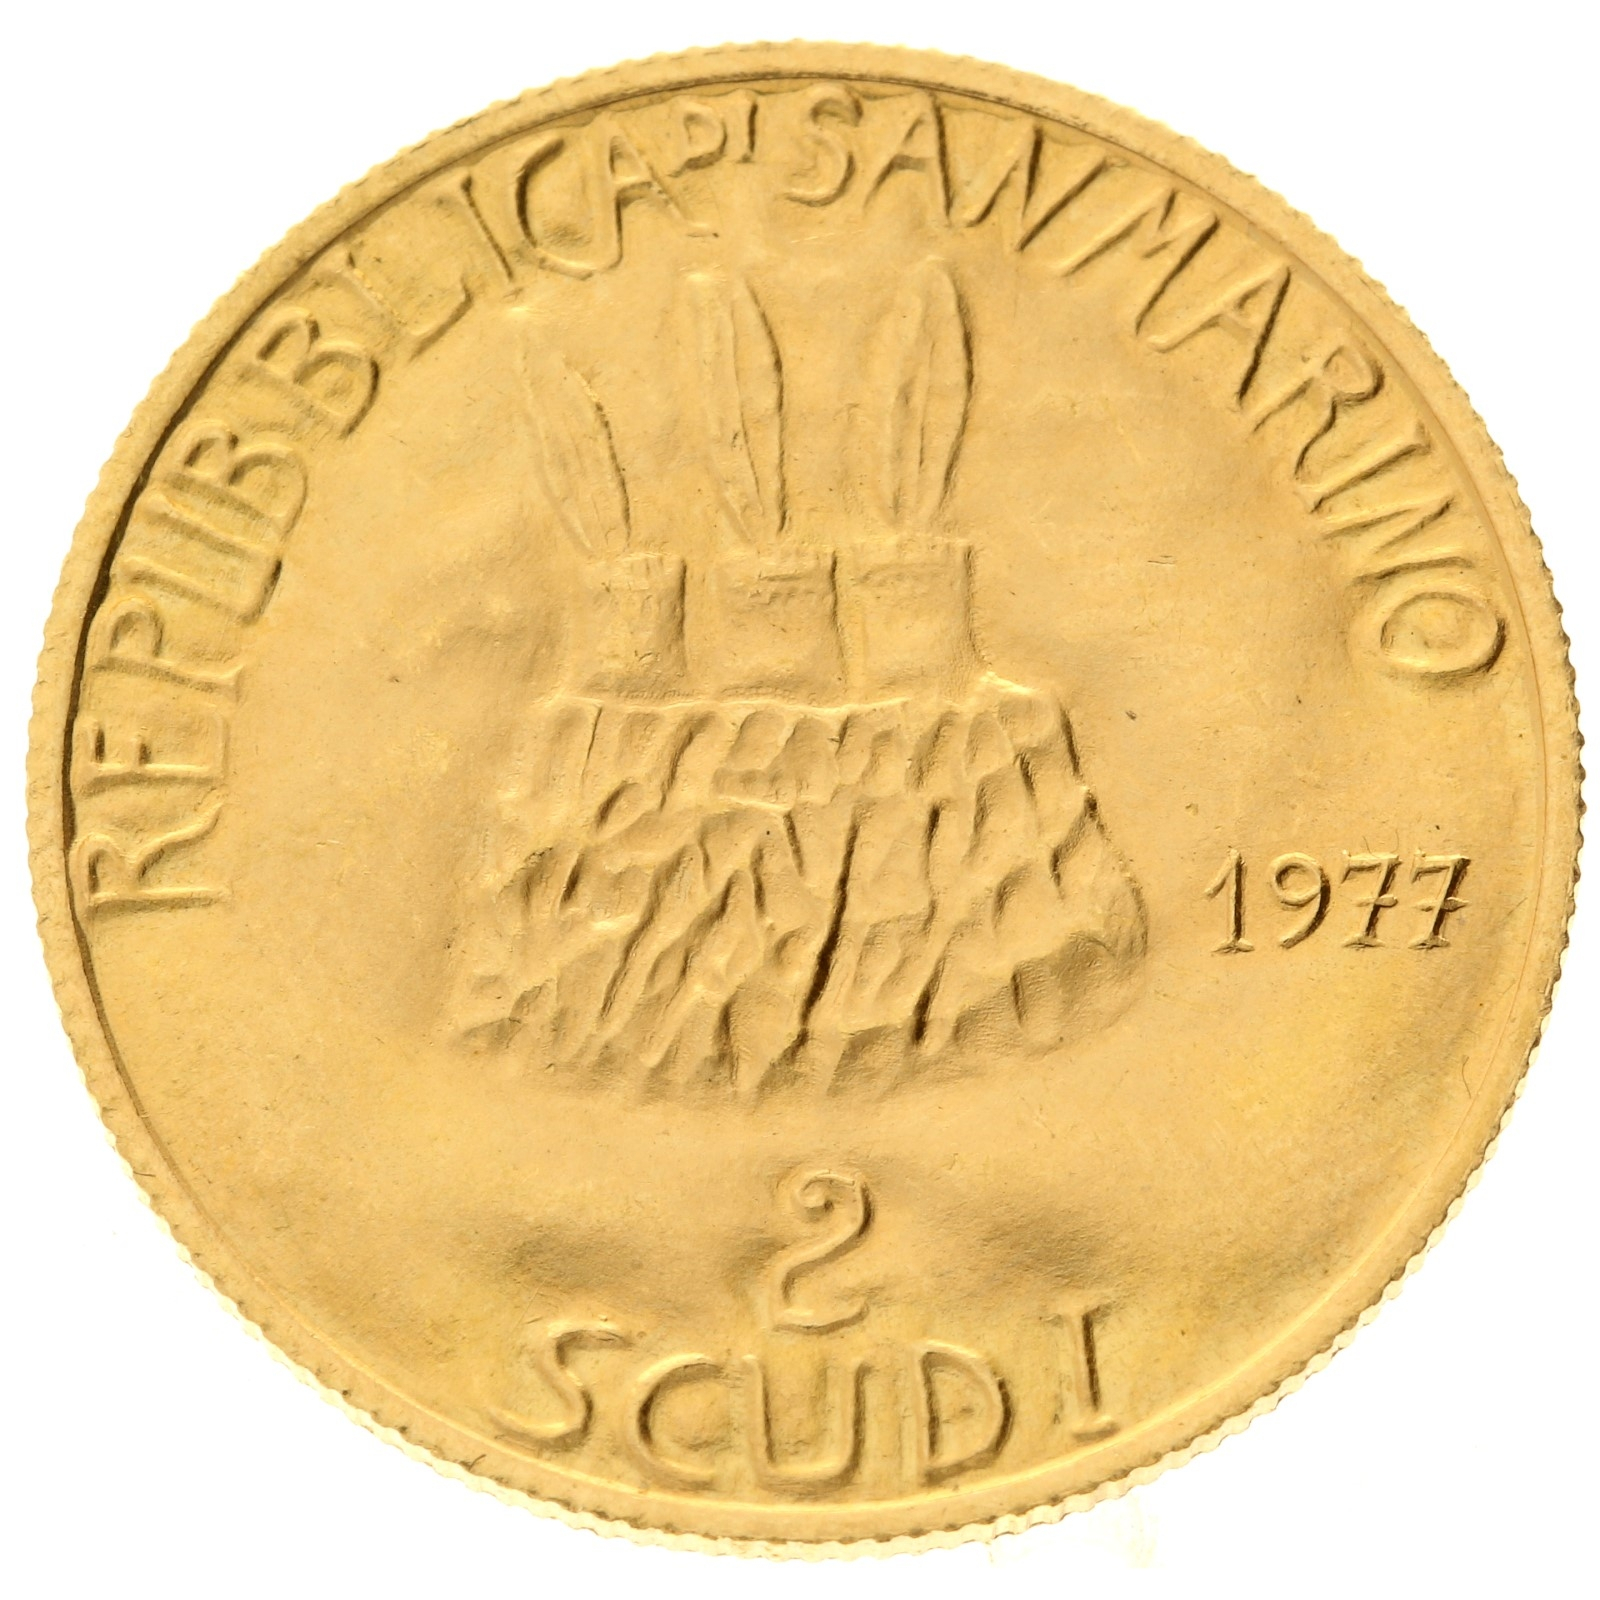 San Marino - 2 Scudi - 1977 - Democracy